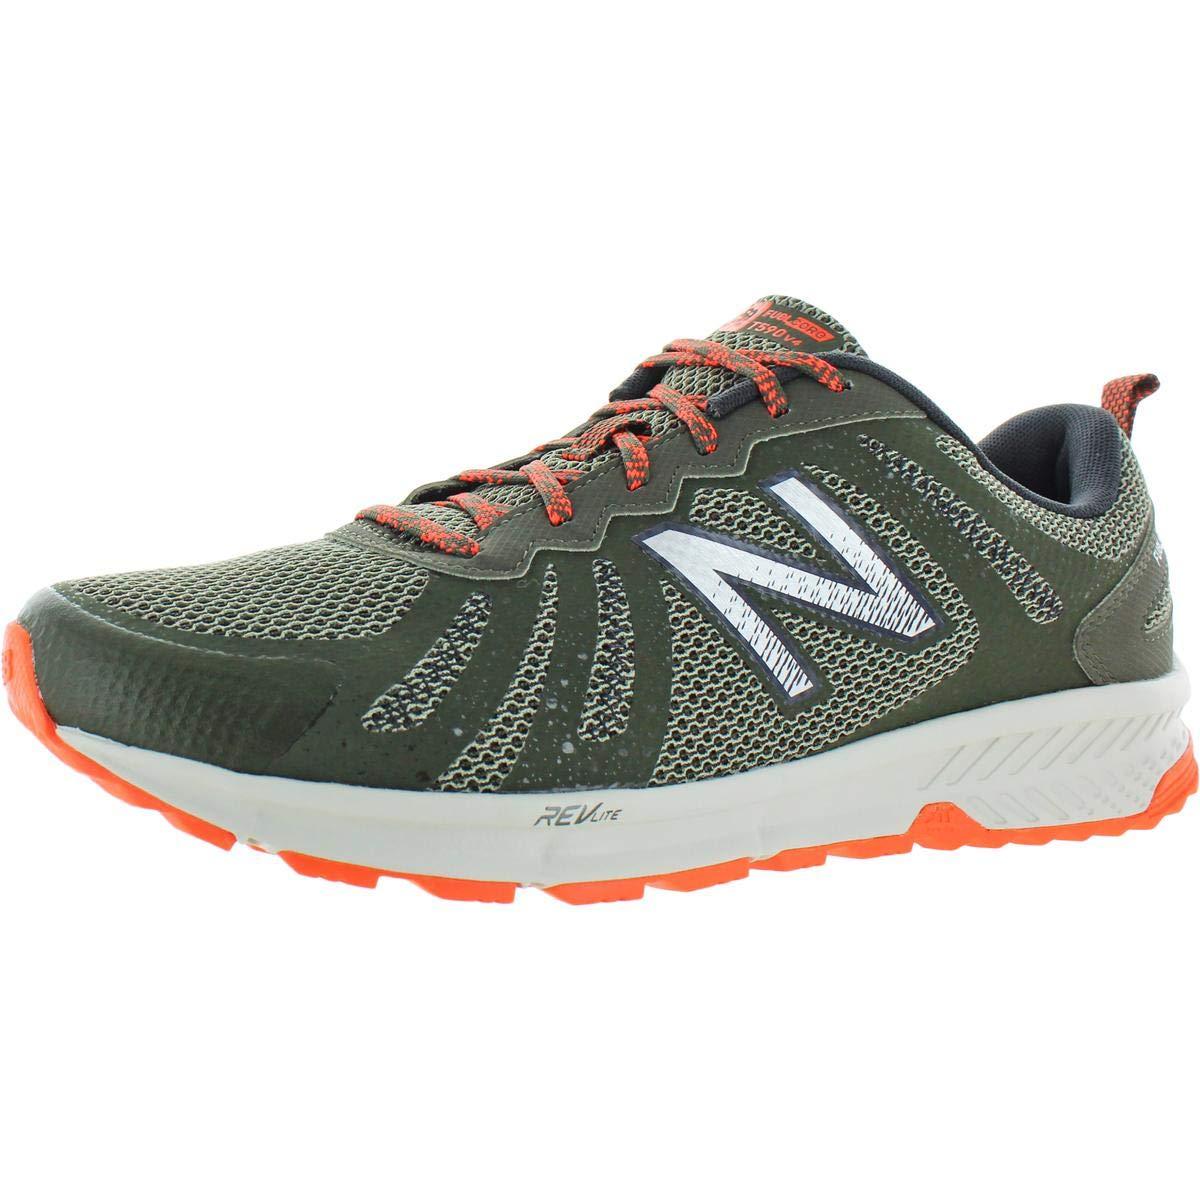 New Balance 590v4 Running Shoes in Green for Men - Lyst